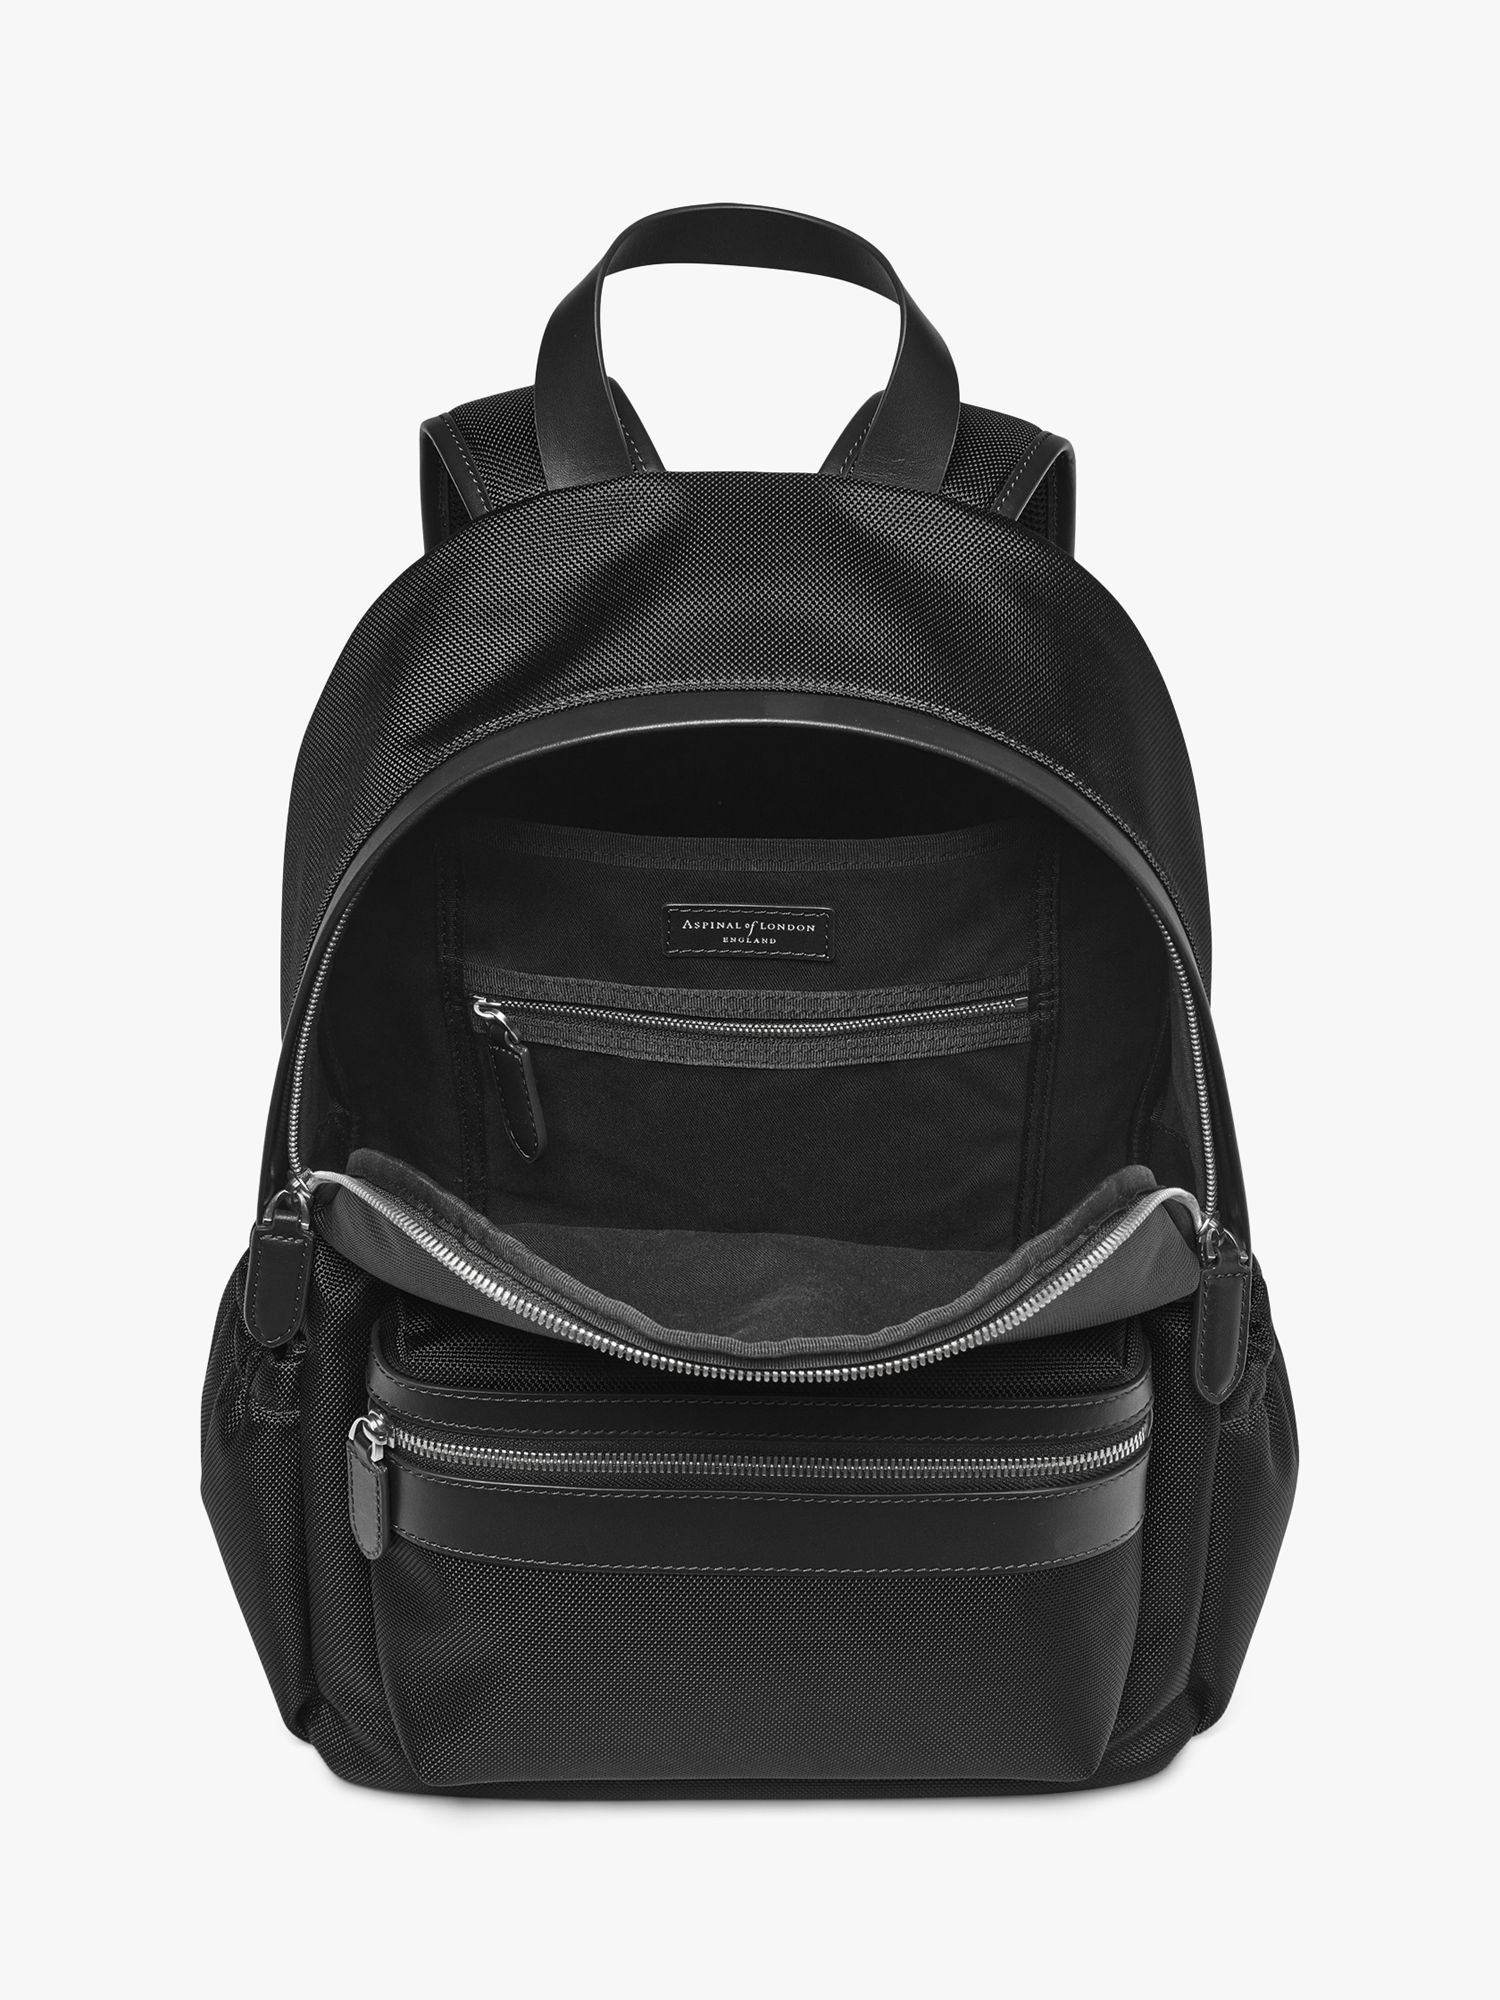 Aspinal of London Commuter Backpack, Black at John Lewis & Partners